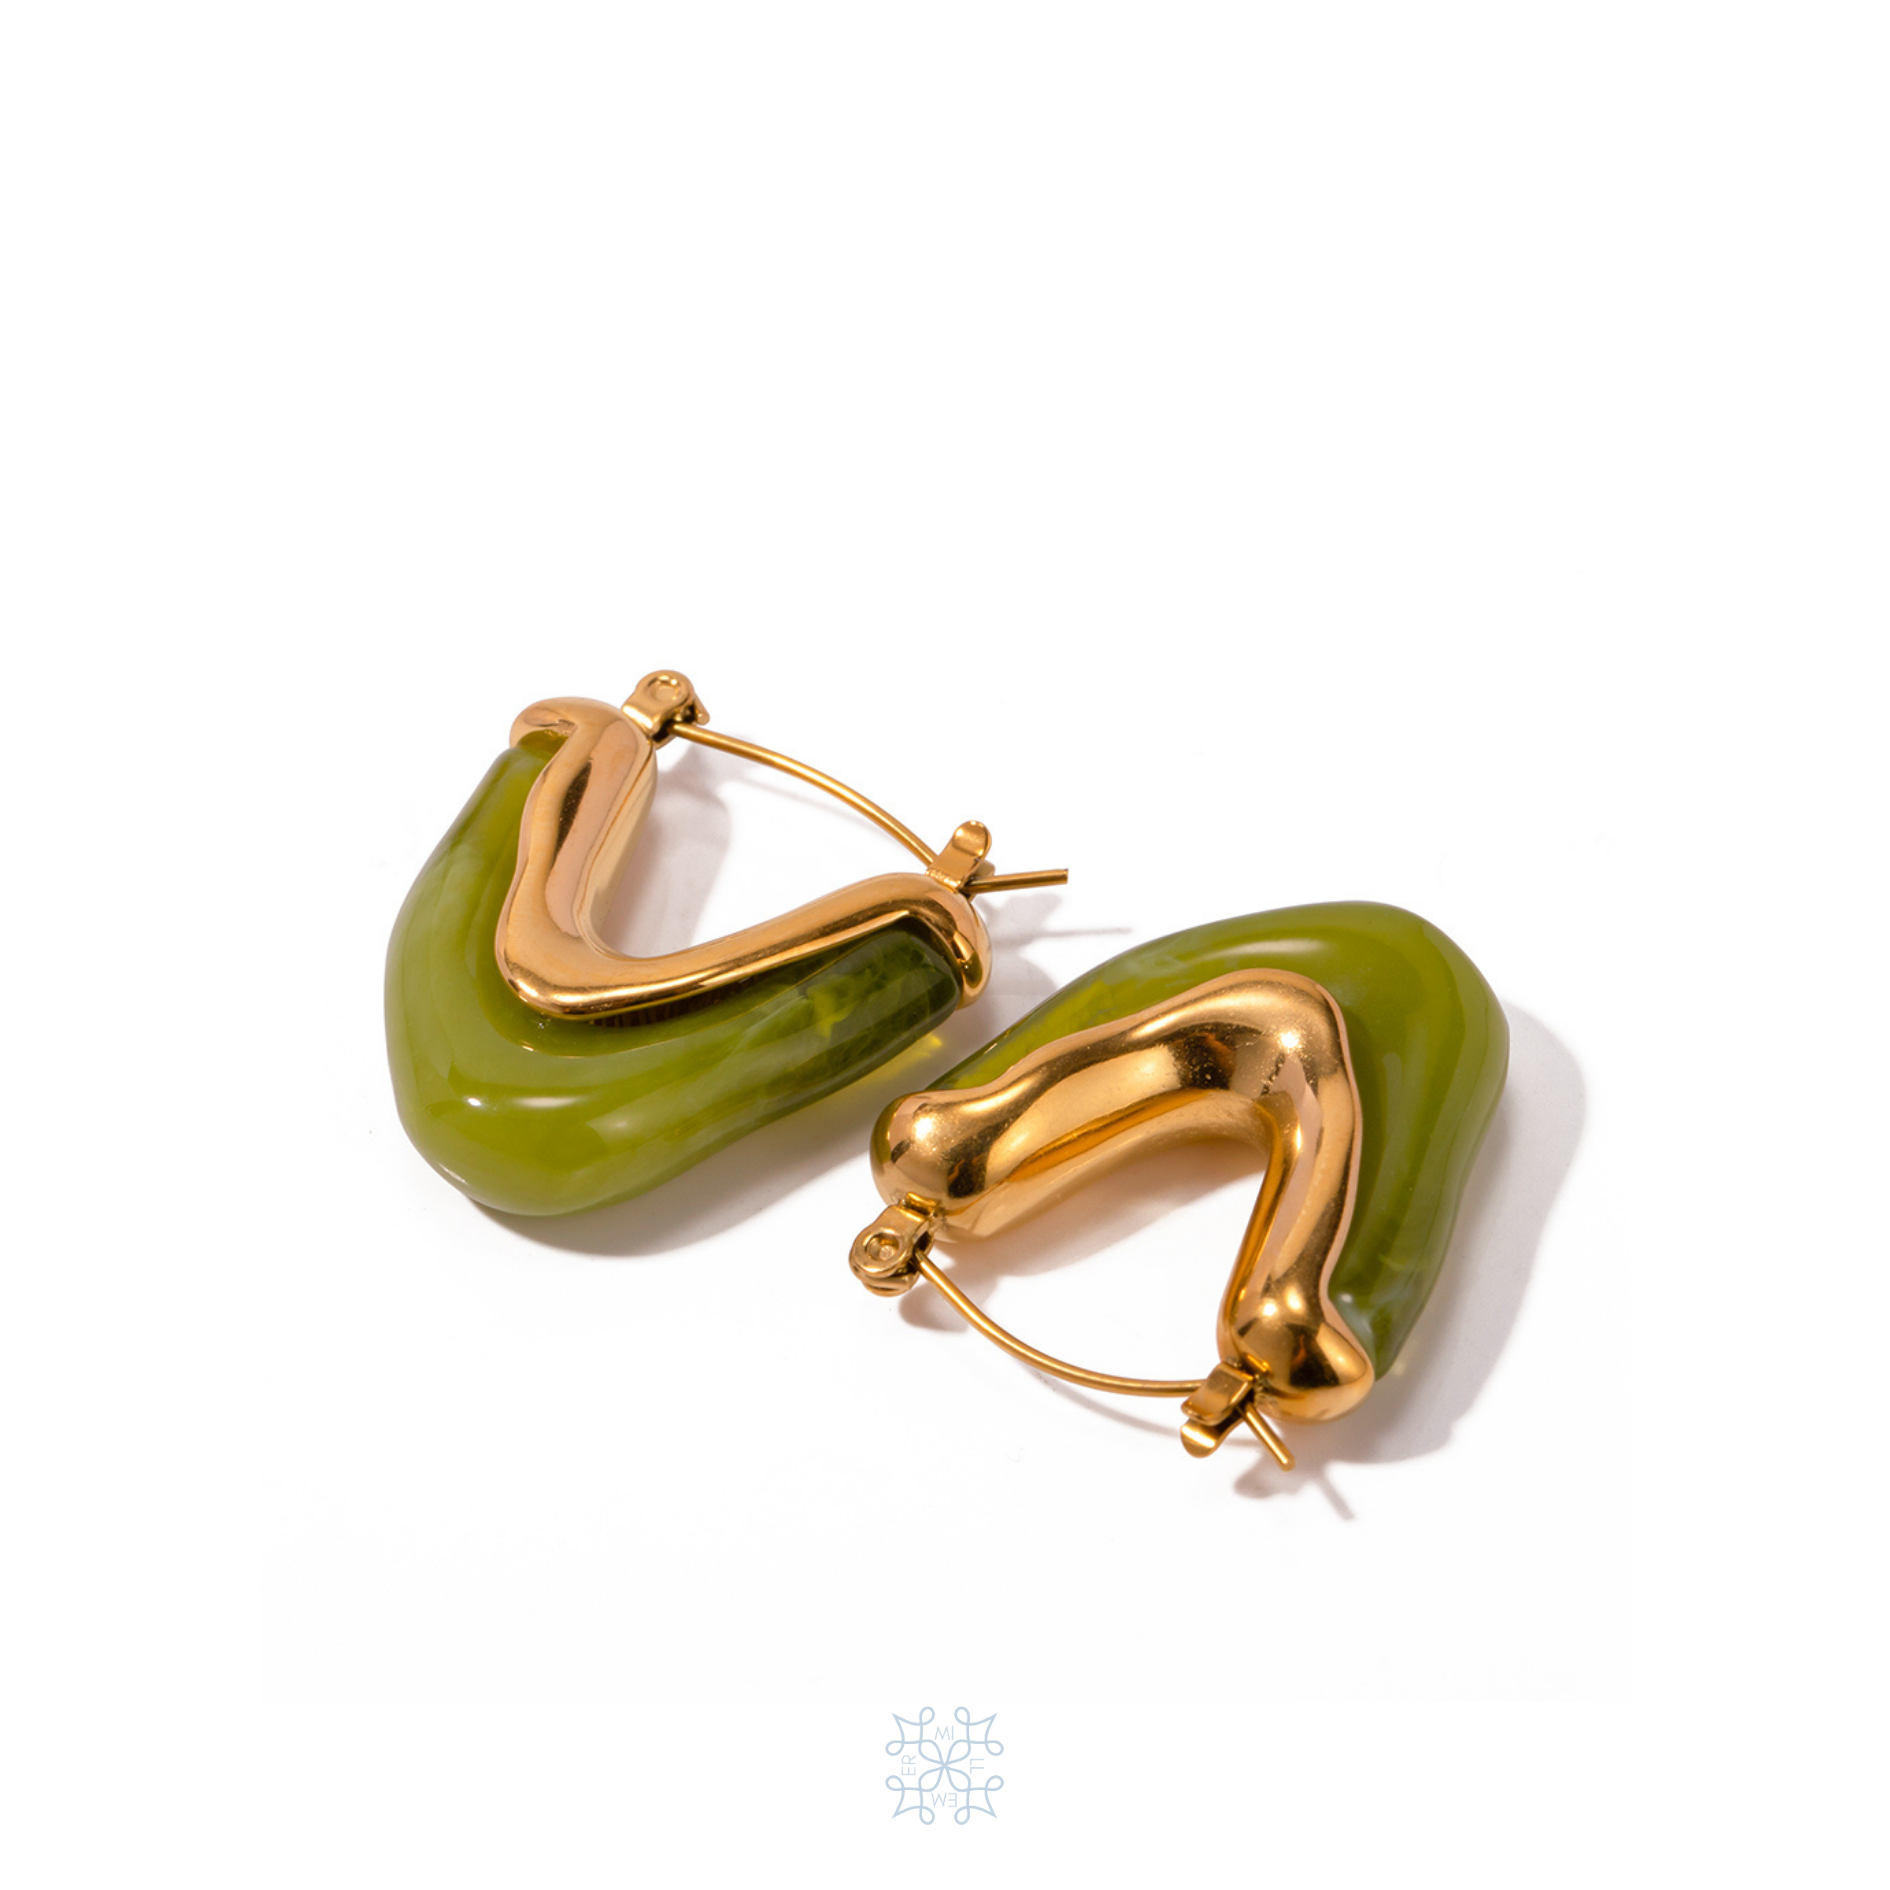 V shape Gold Plated Hoop Earrings made with Green Acrylic. Waterproof Earrings.